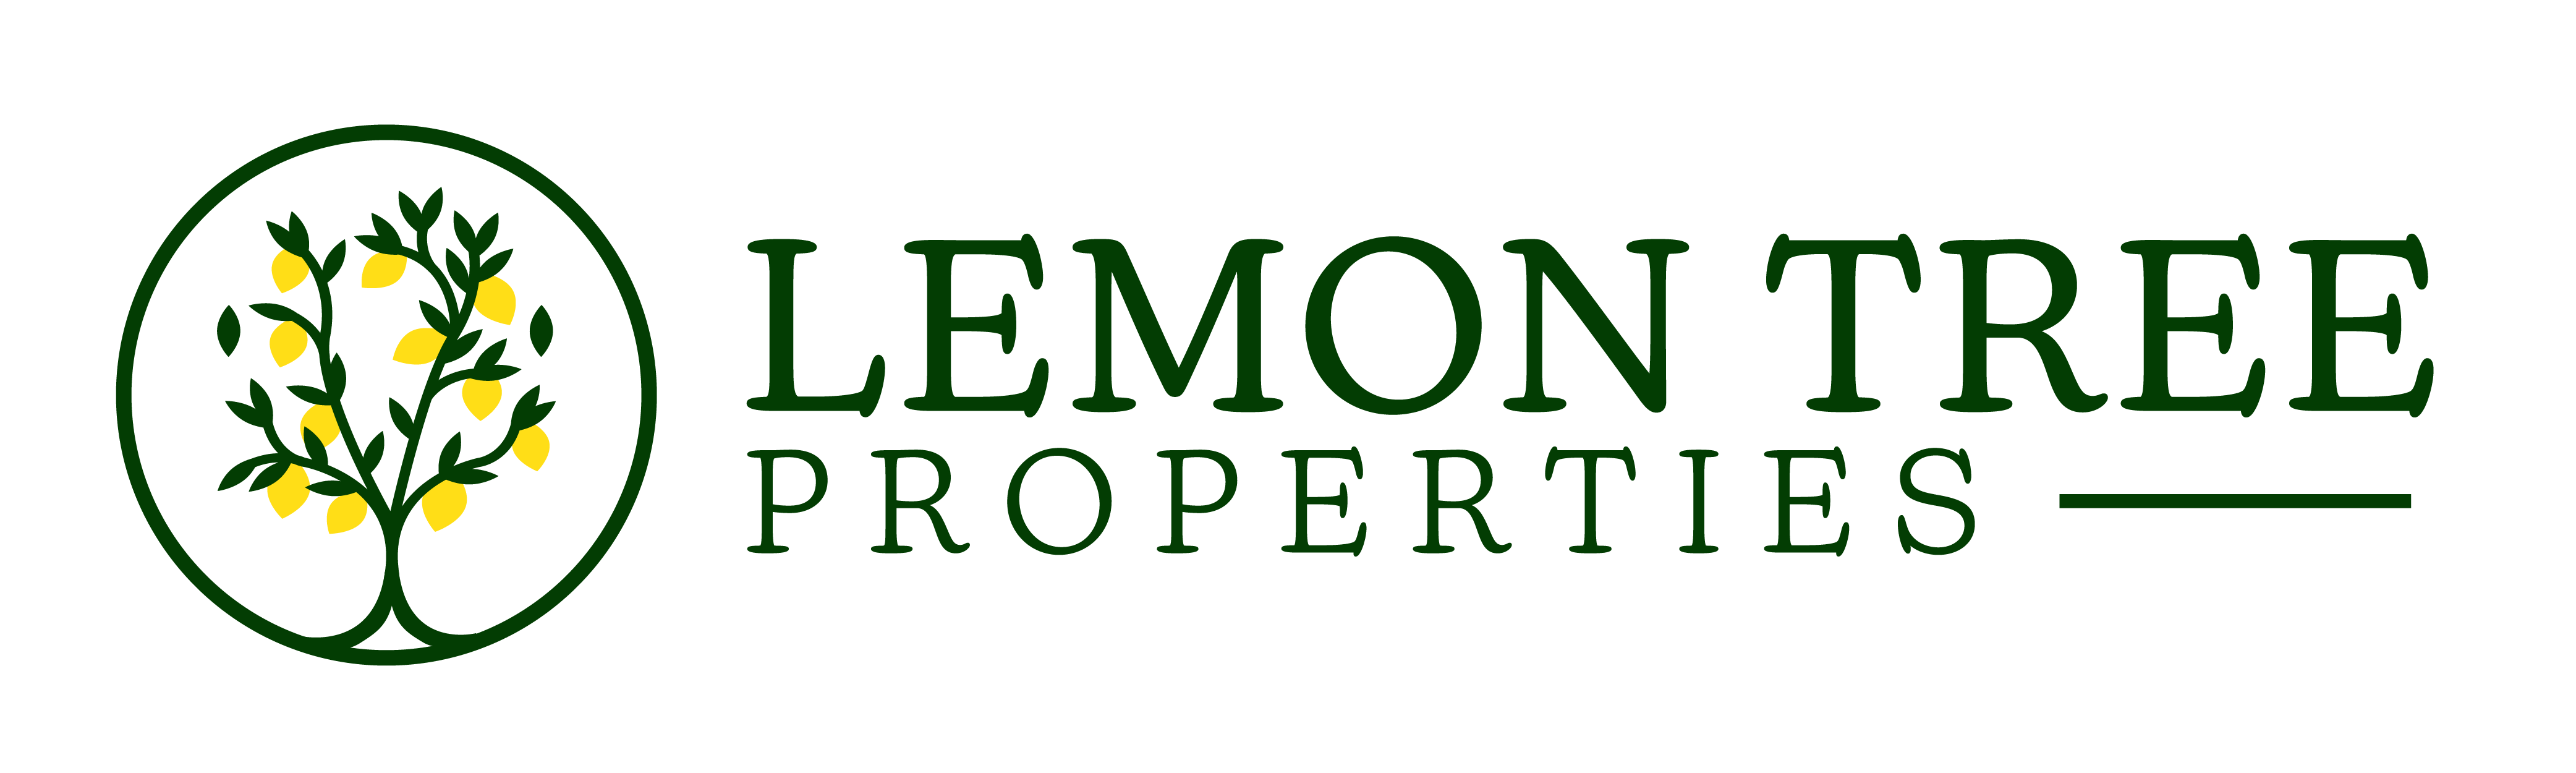 Lemon Tree Properties logo